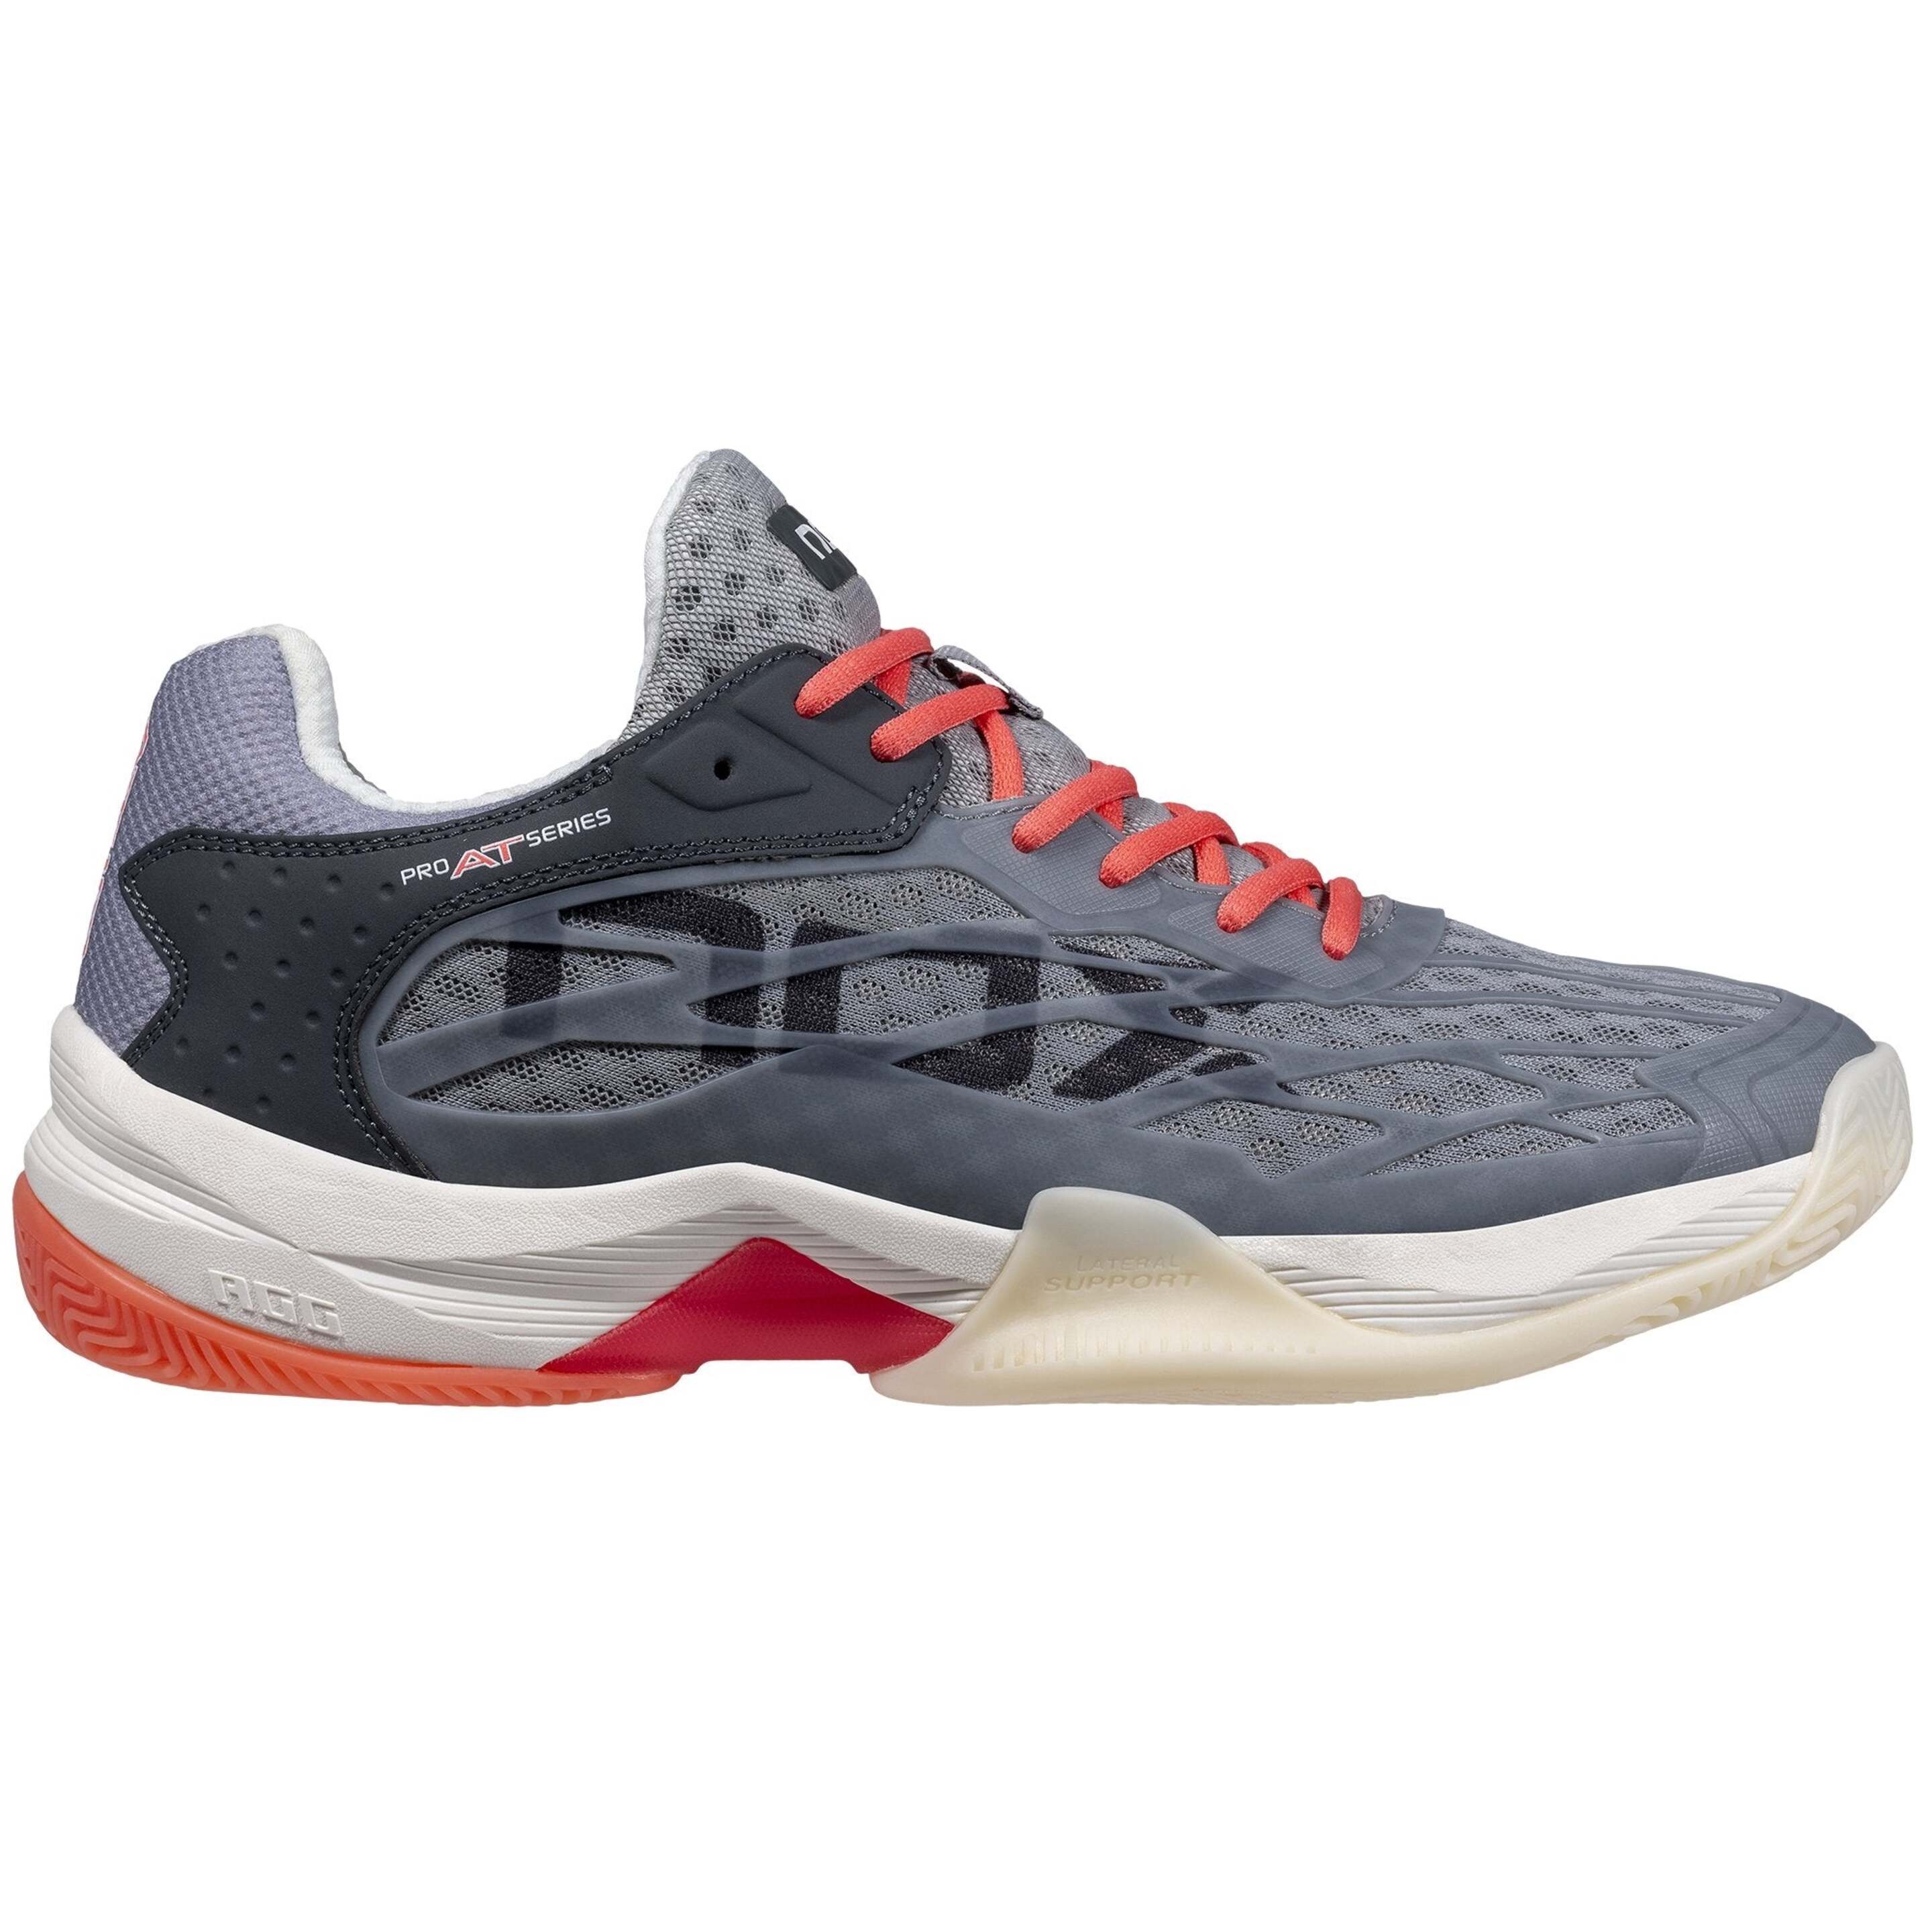 Nox At10 Lux Laranja Cinzento Calatluxcgpf - NOX AT10 Lux Coral Grey: sapatos de alta tecnologia com um design inovador para um desempenho ideal no padel. | Sport Zone MKP